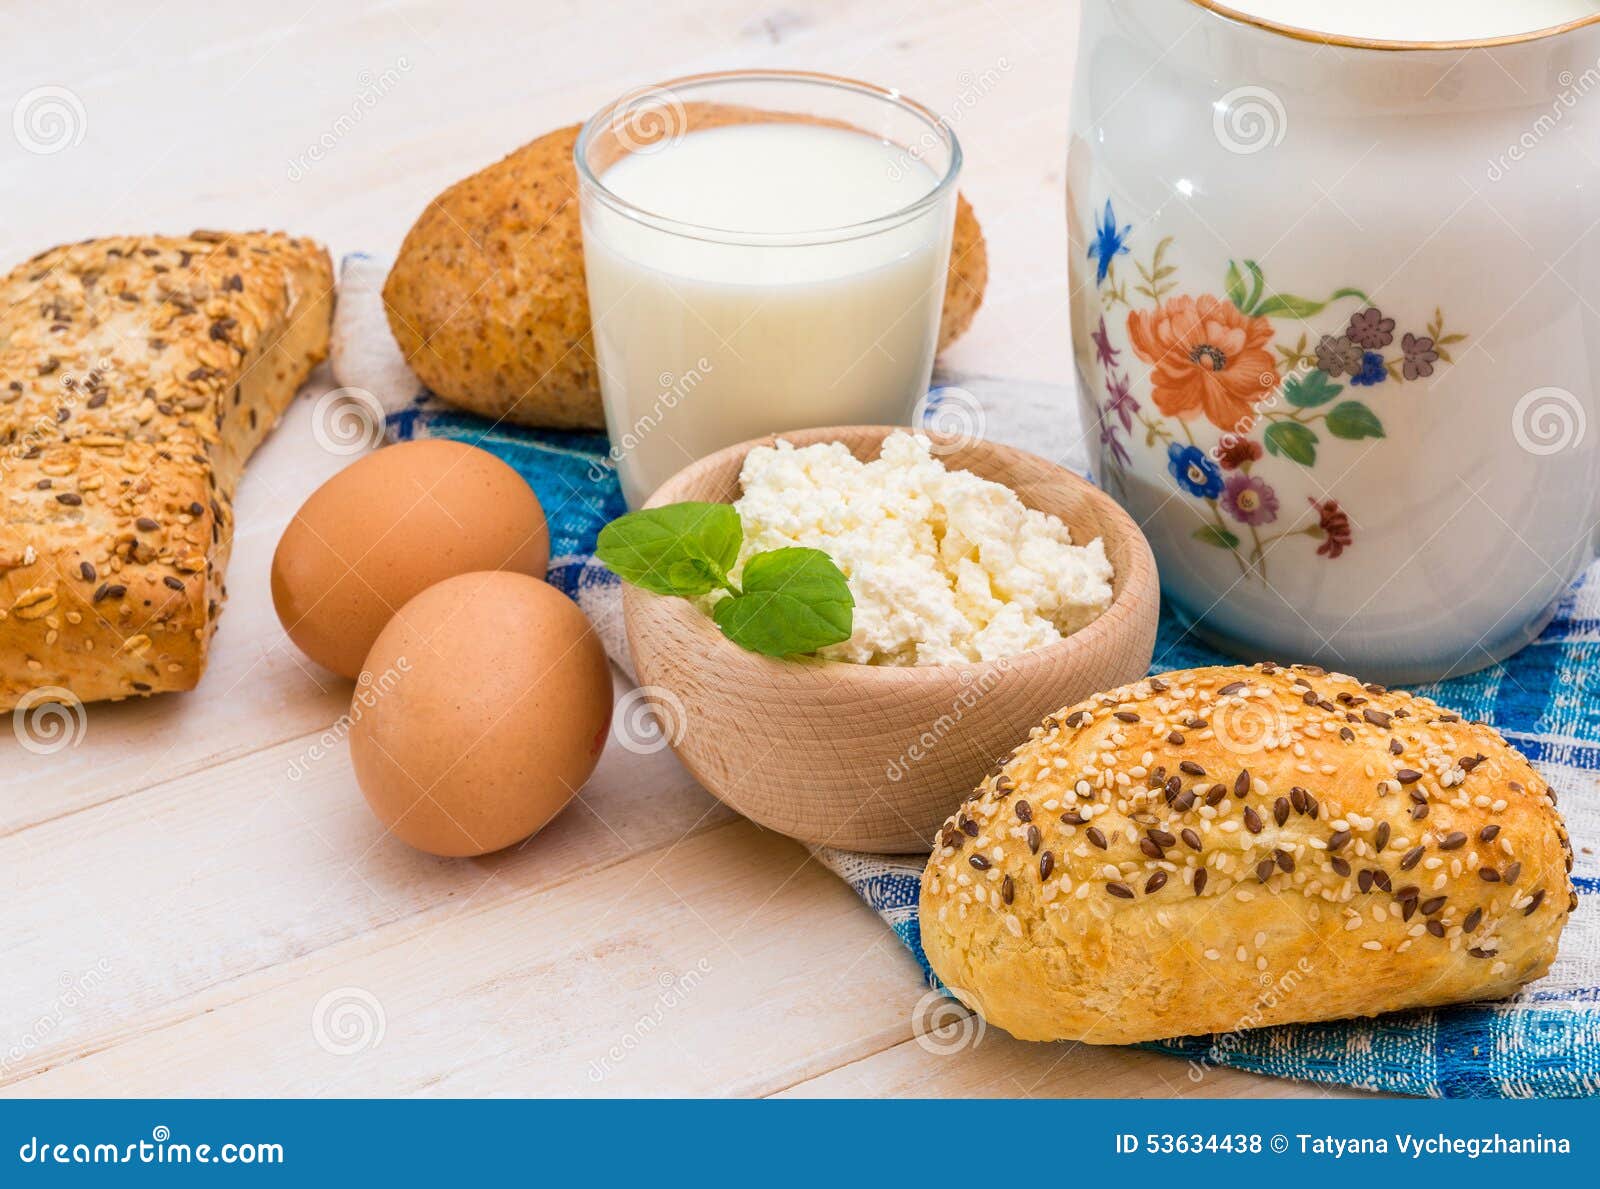 breakfast cheese milk bread eggs light wooden background 53634438